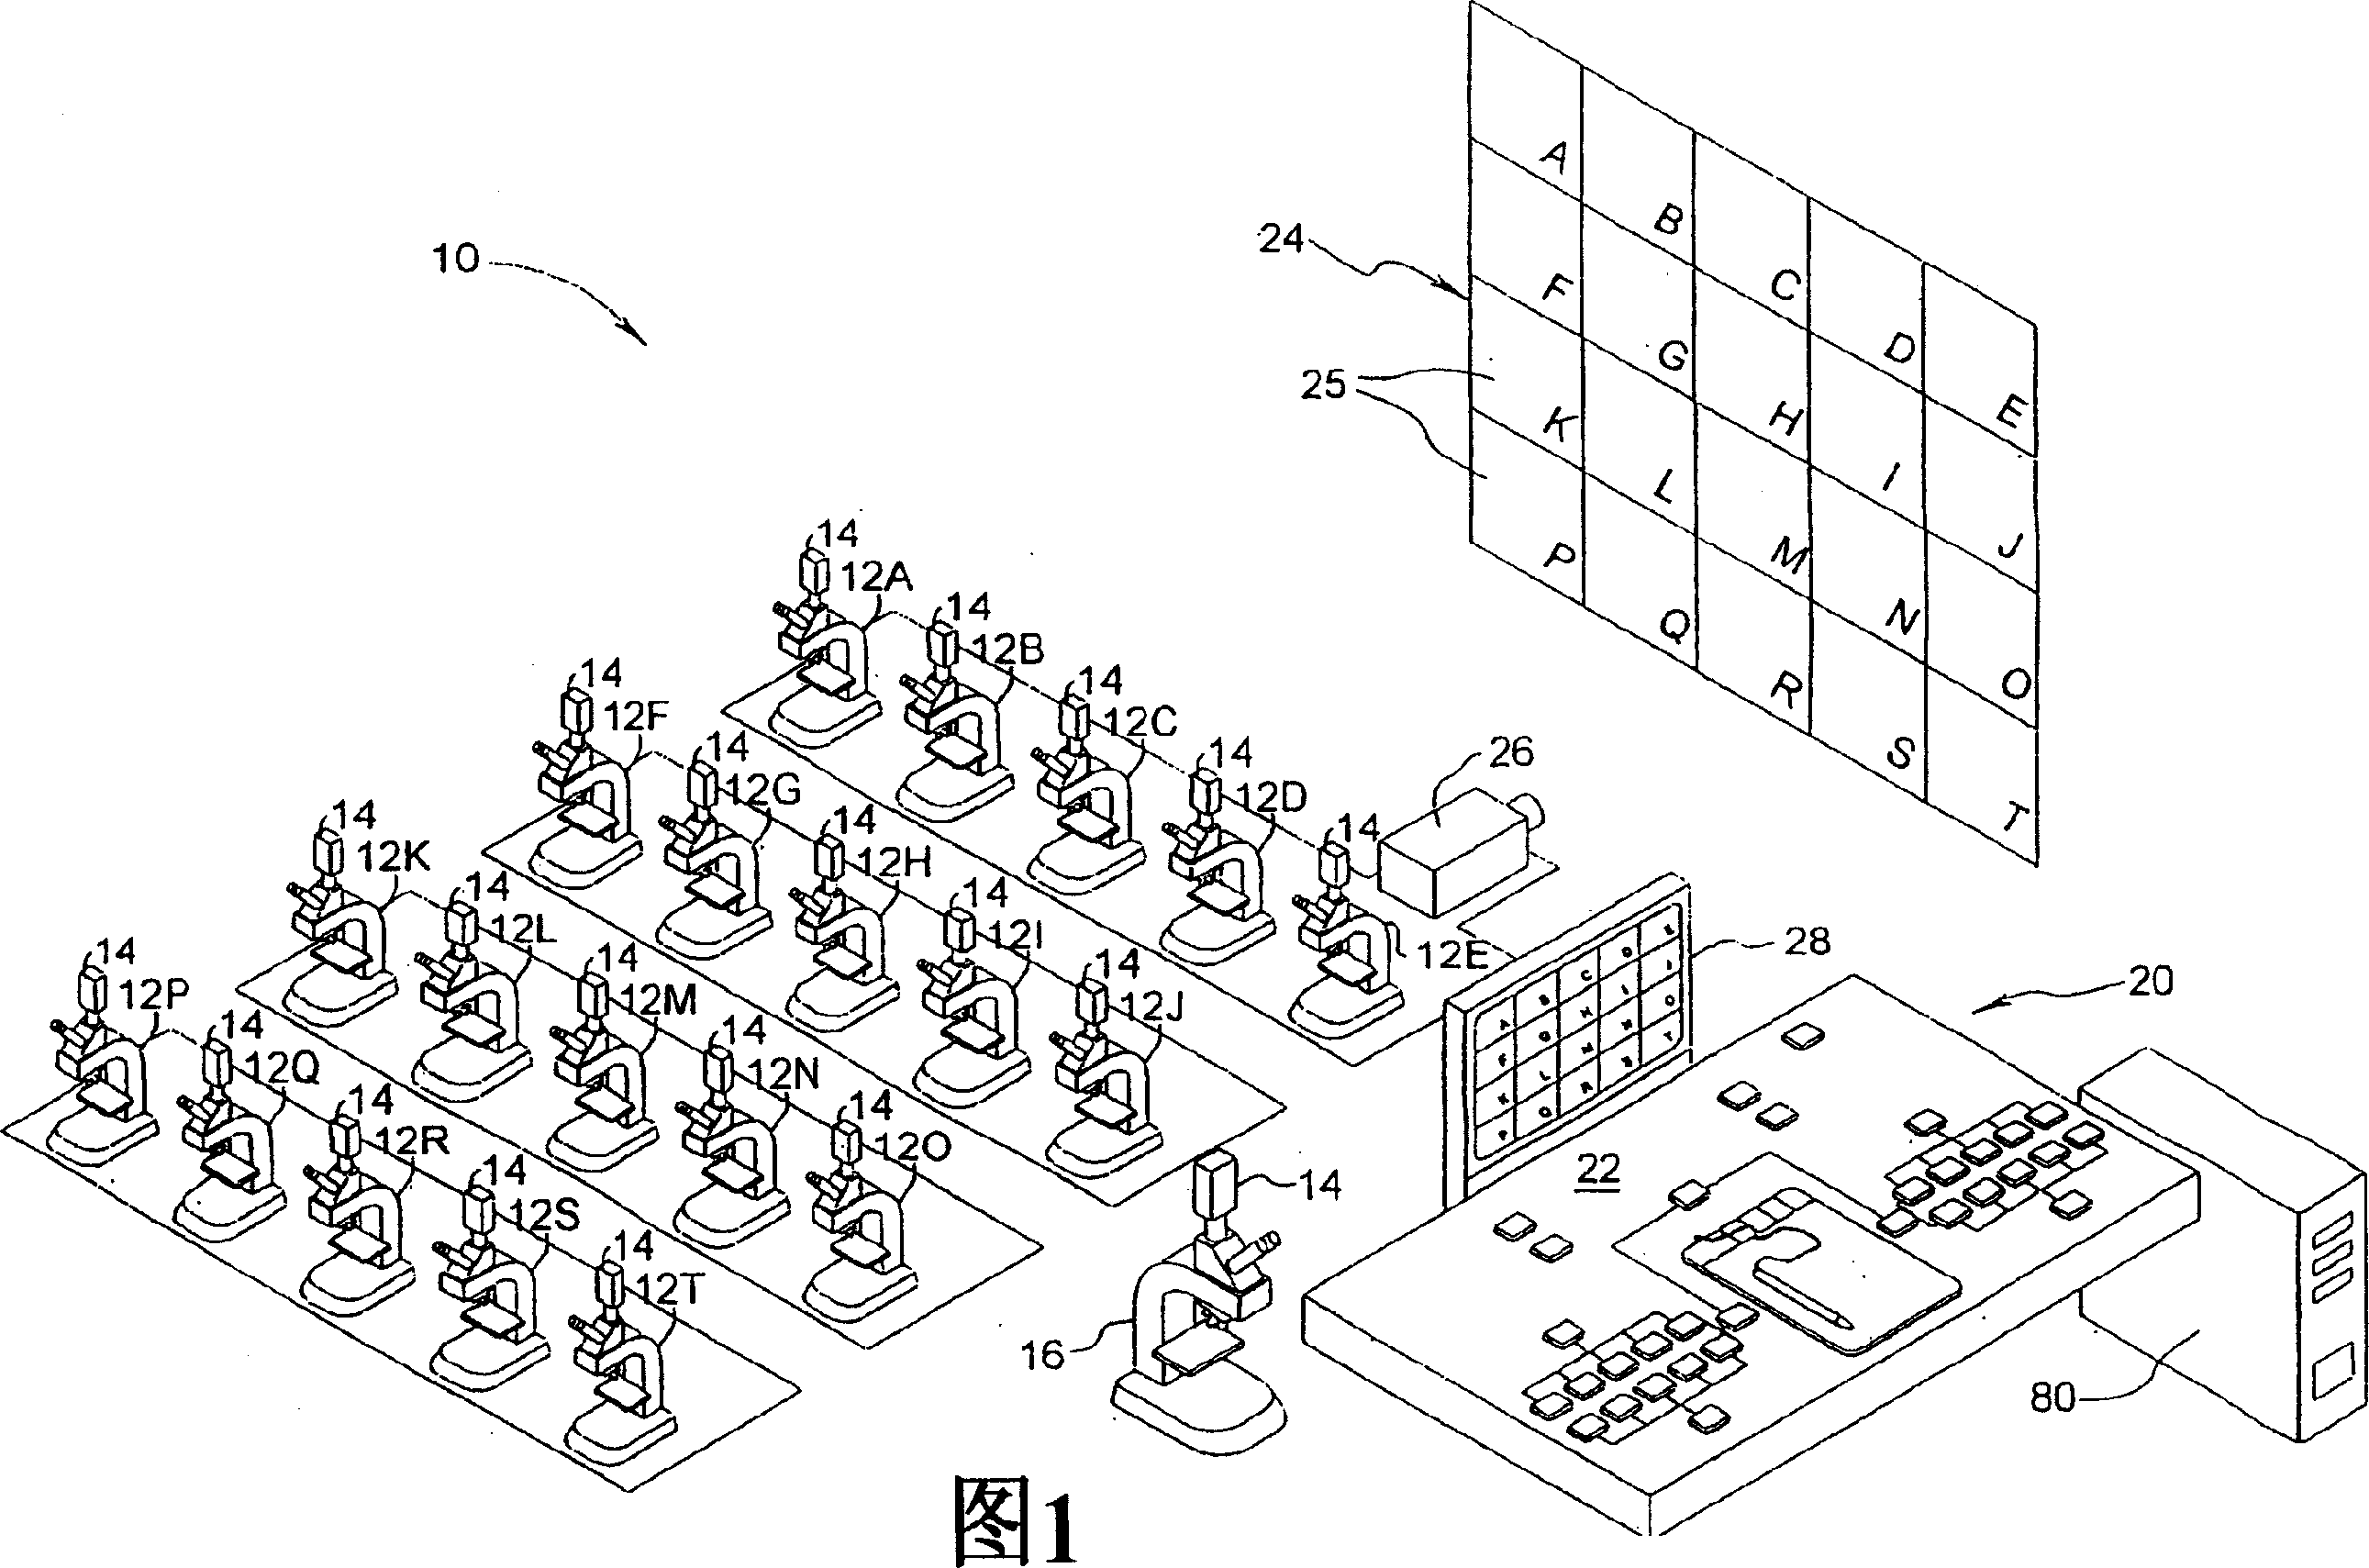 Microscopy laboratory system